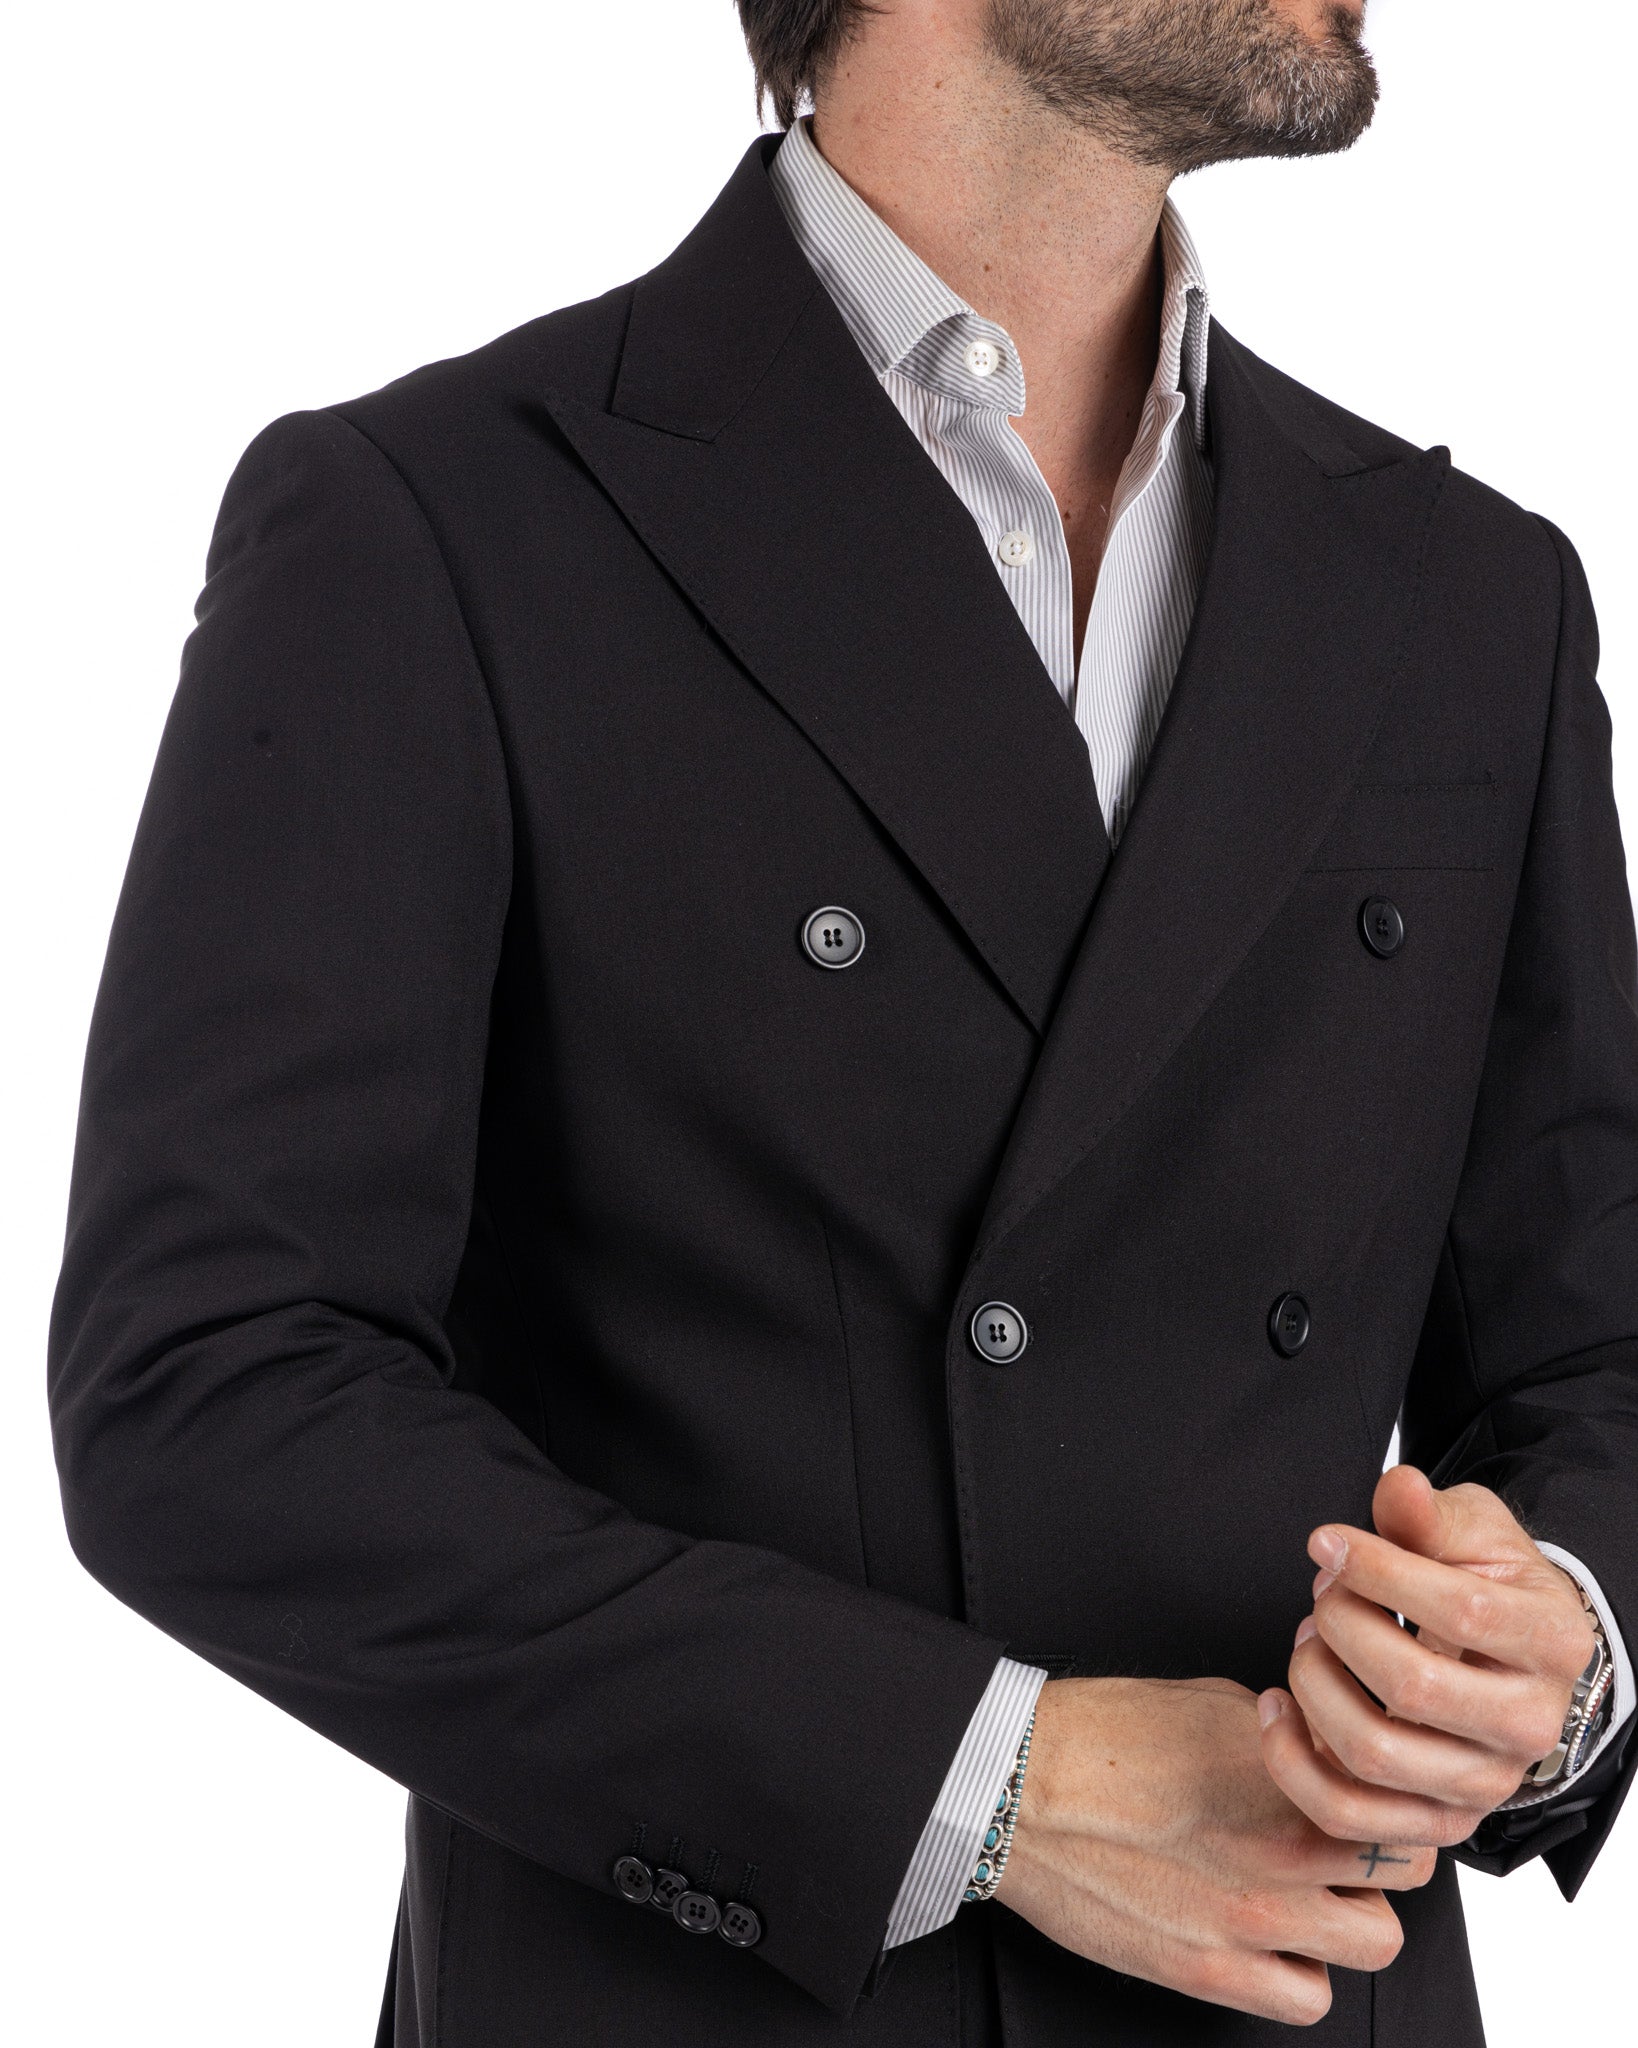 Monaco - black double-breasted suit